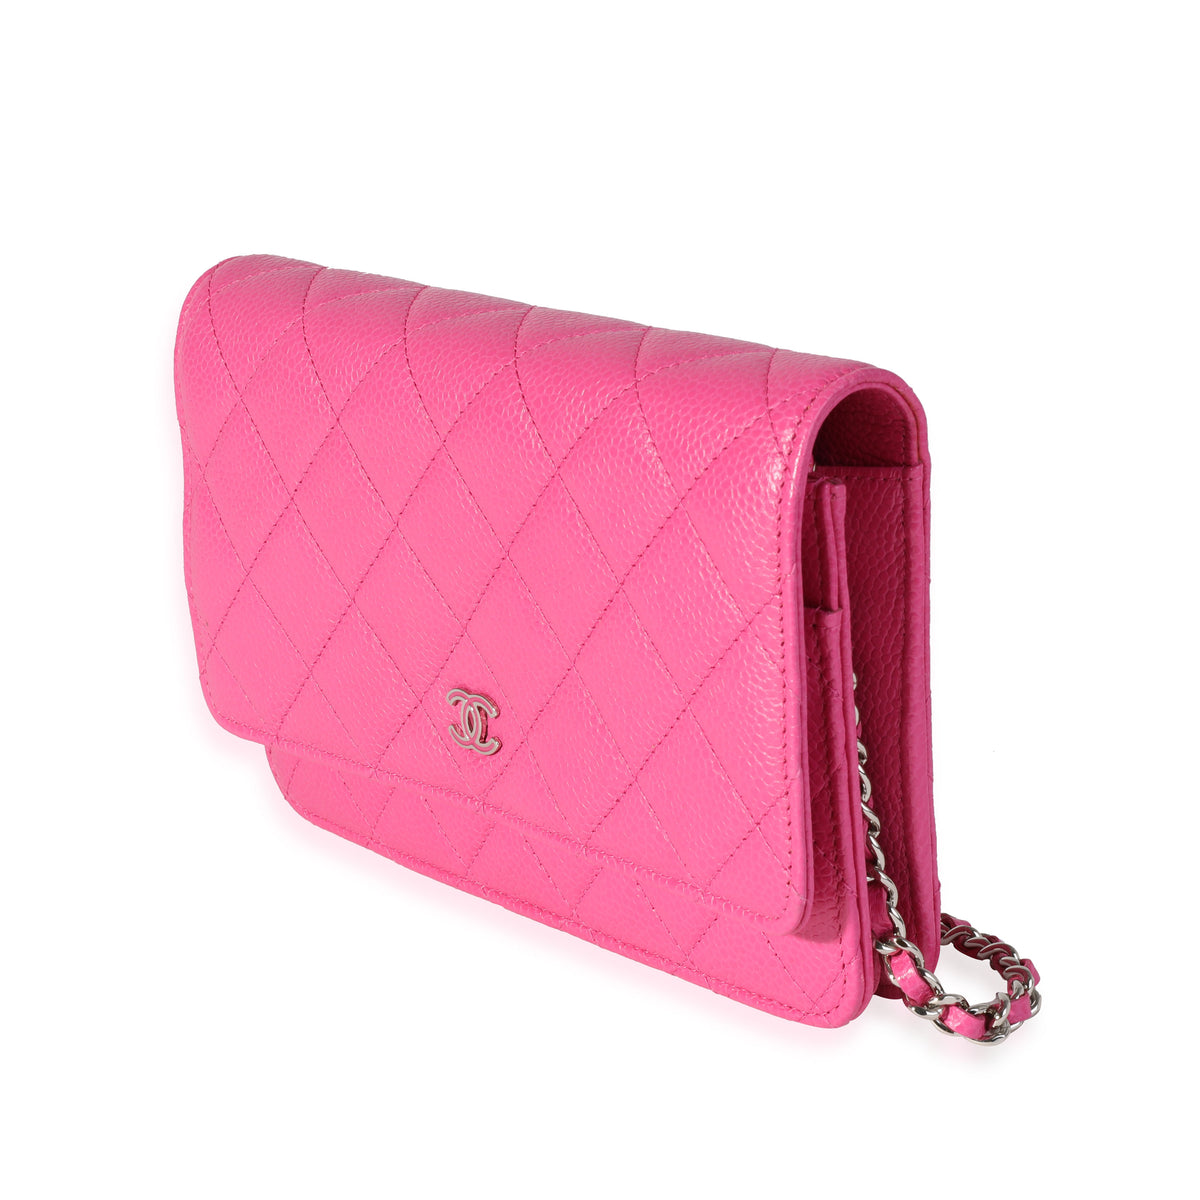 CHANEL Caviar Hot Pink Long Wallet WOC Bag